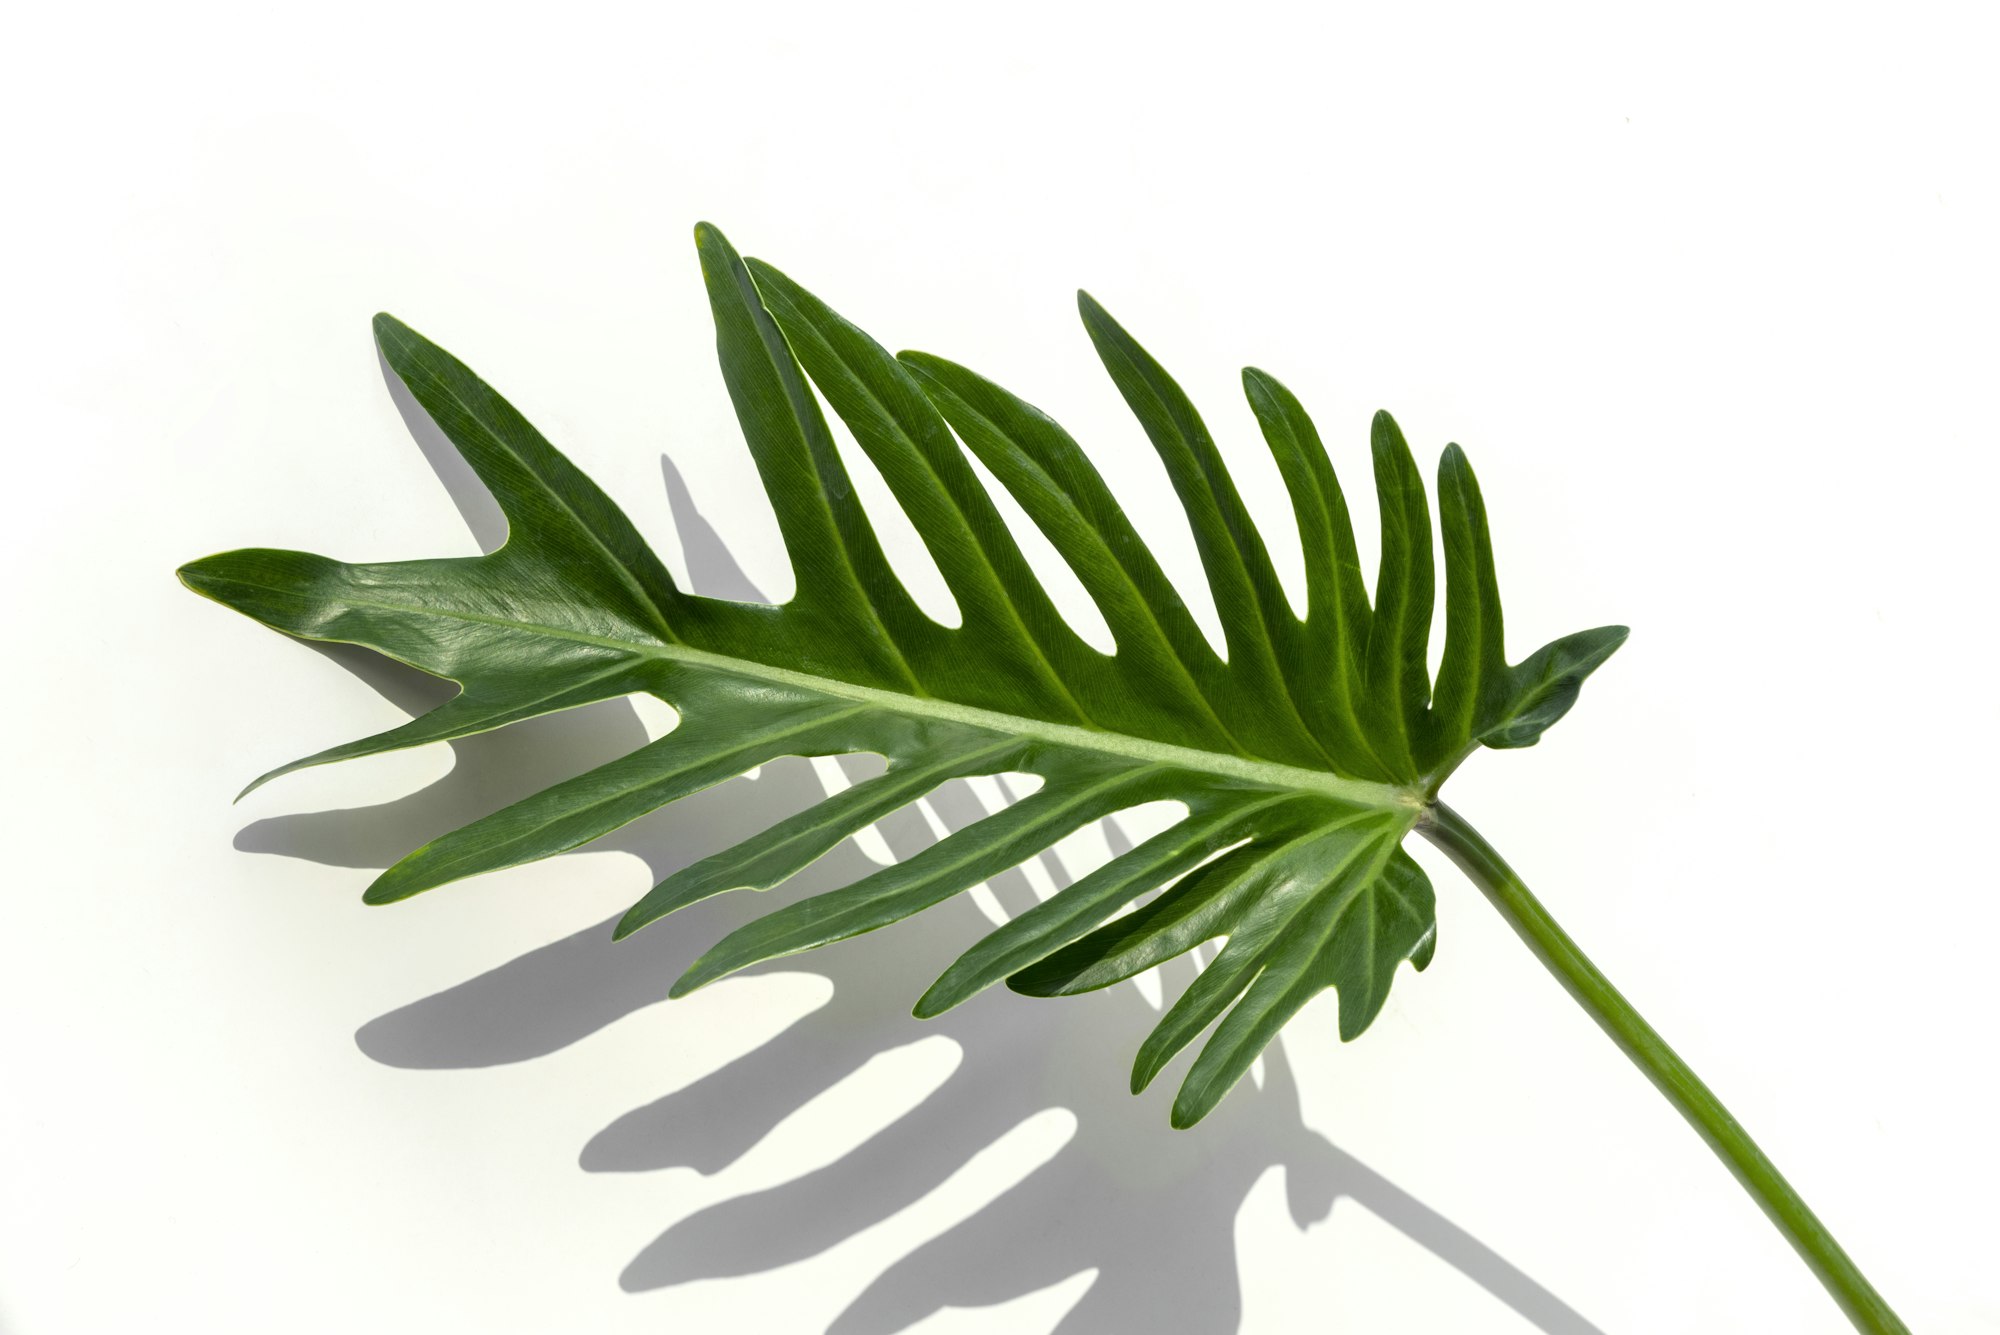 Closeup to fresh green Philodendron Xanadu leaf